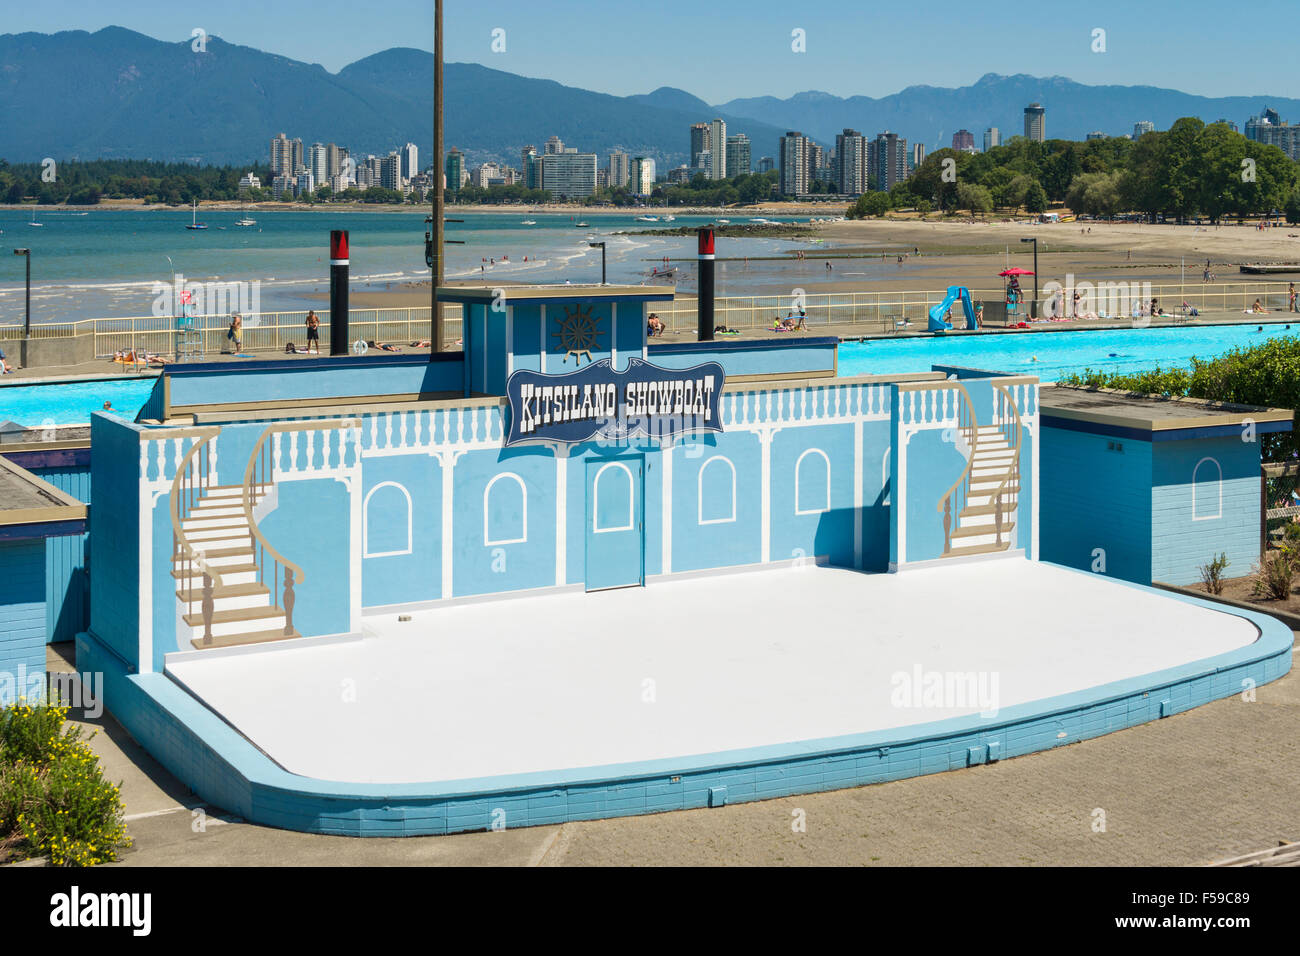 Kitsilano Showboat, Kitsilano Beach, Vancouver, gibt ein Open-Air-Amphitheater. Es beherbergt kostenlose Leistungen im Sommer seit 1935. Stockfoto